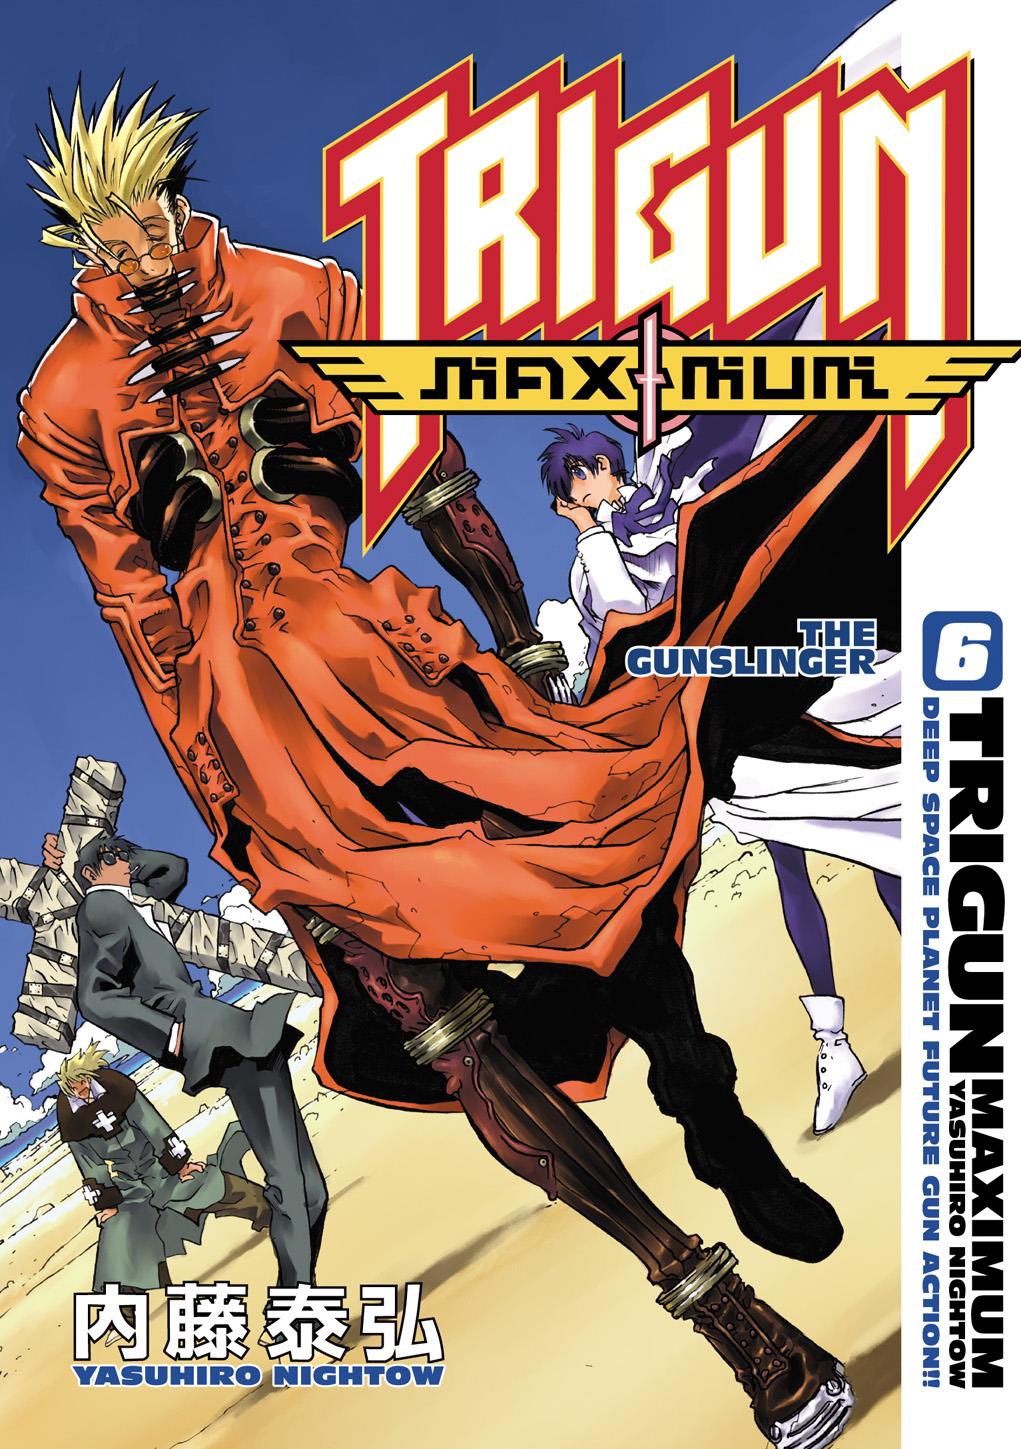 Trigun Maximum, Chapter 34 - Trigun Manga Online